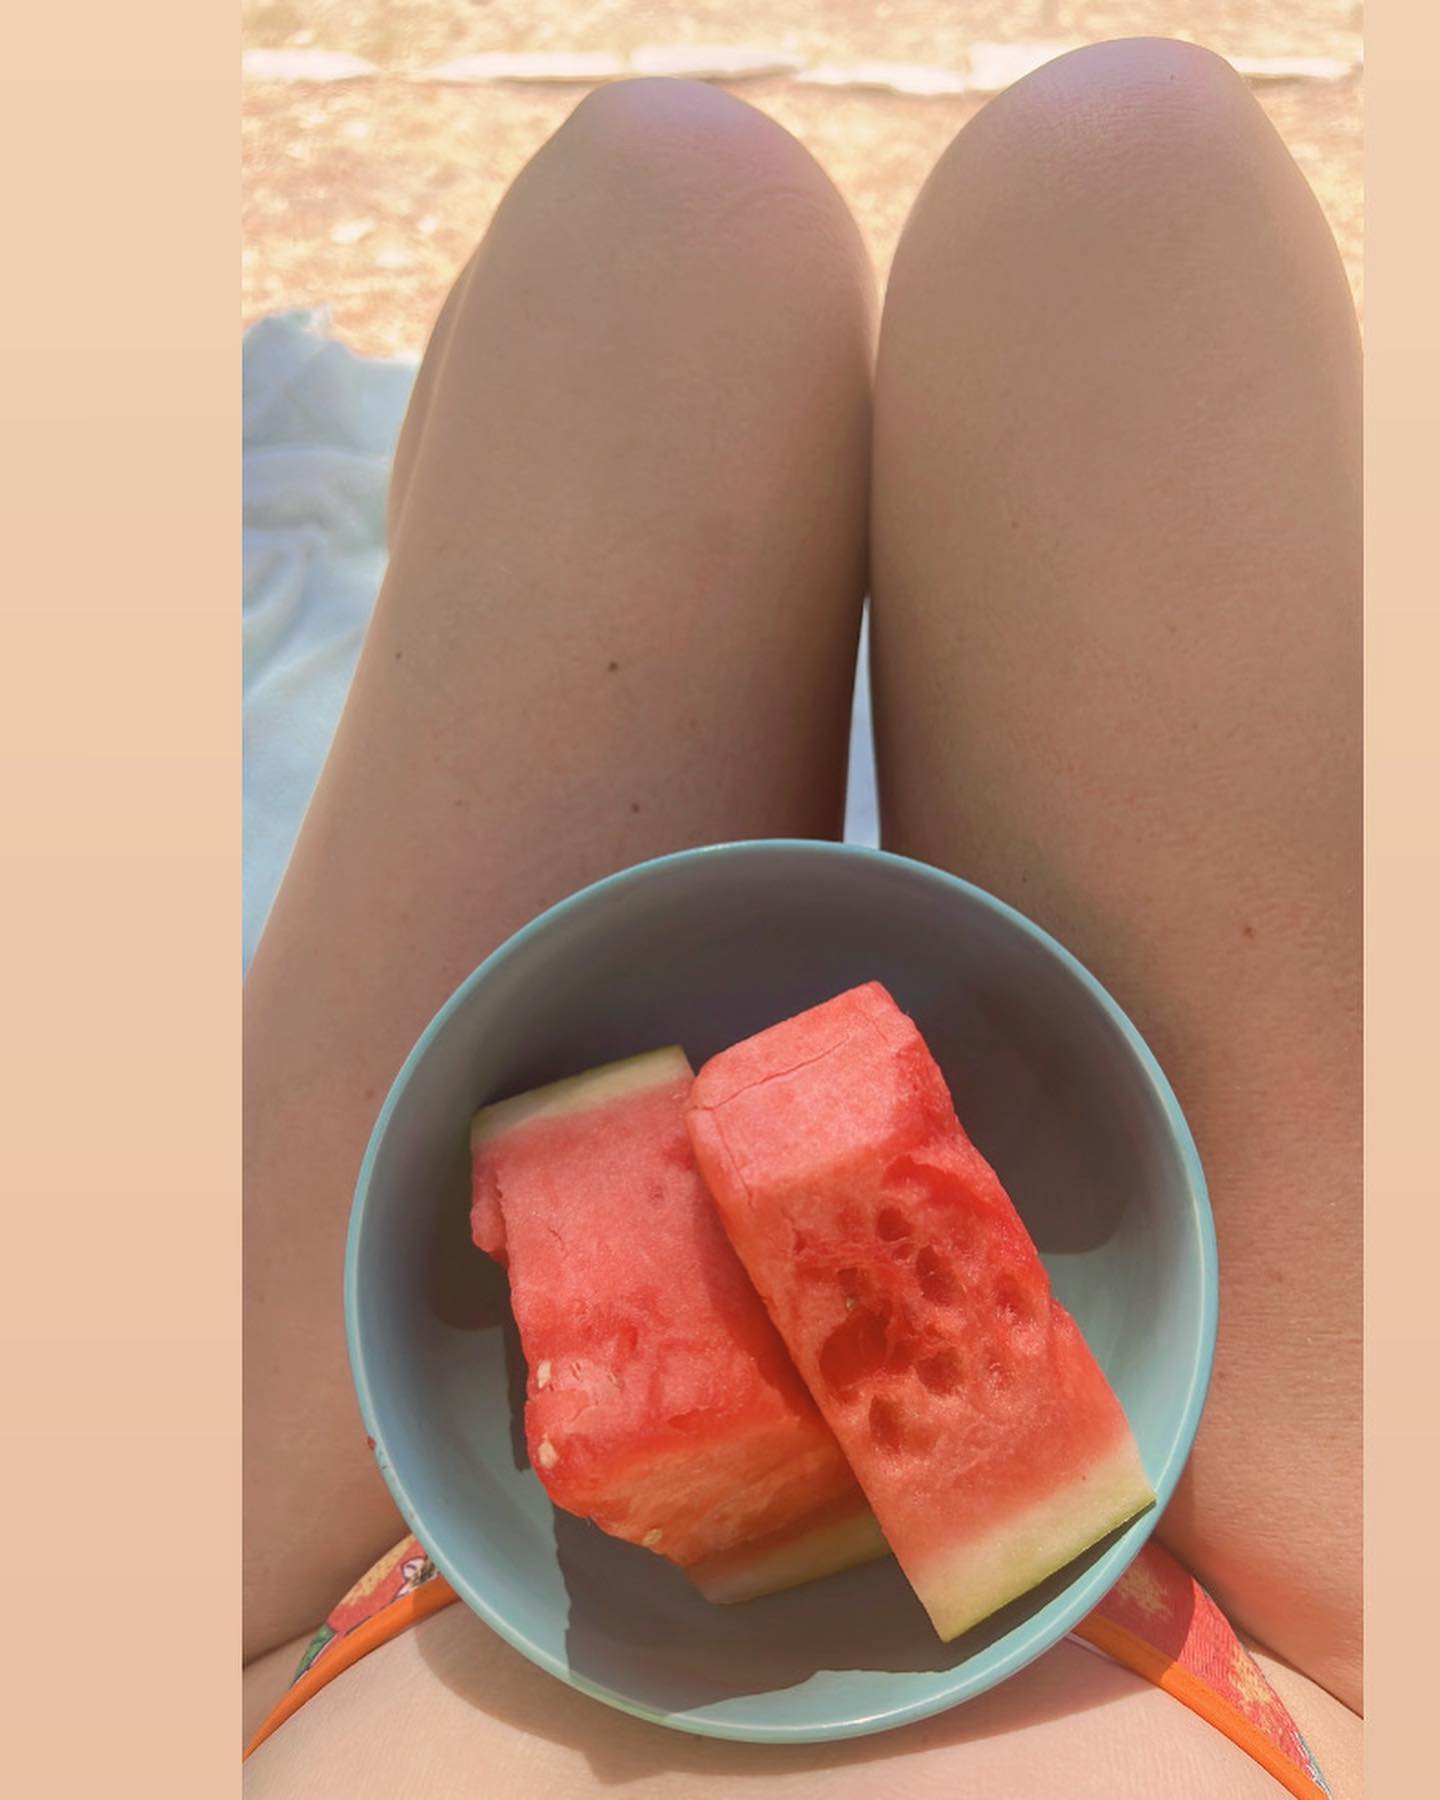 Eating watermelon and drinking fresh-squeezed orange juice in my California oranges bikini because I love a good theme 🍊🍉